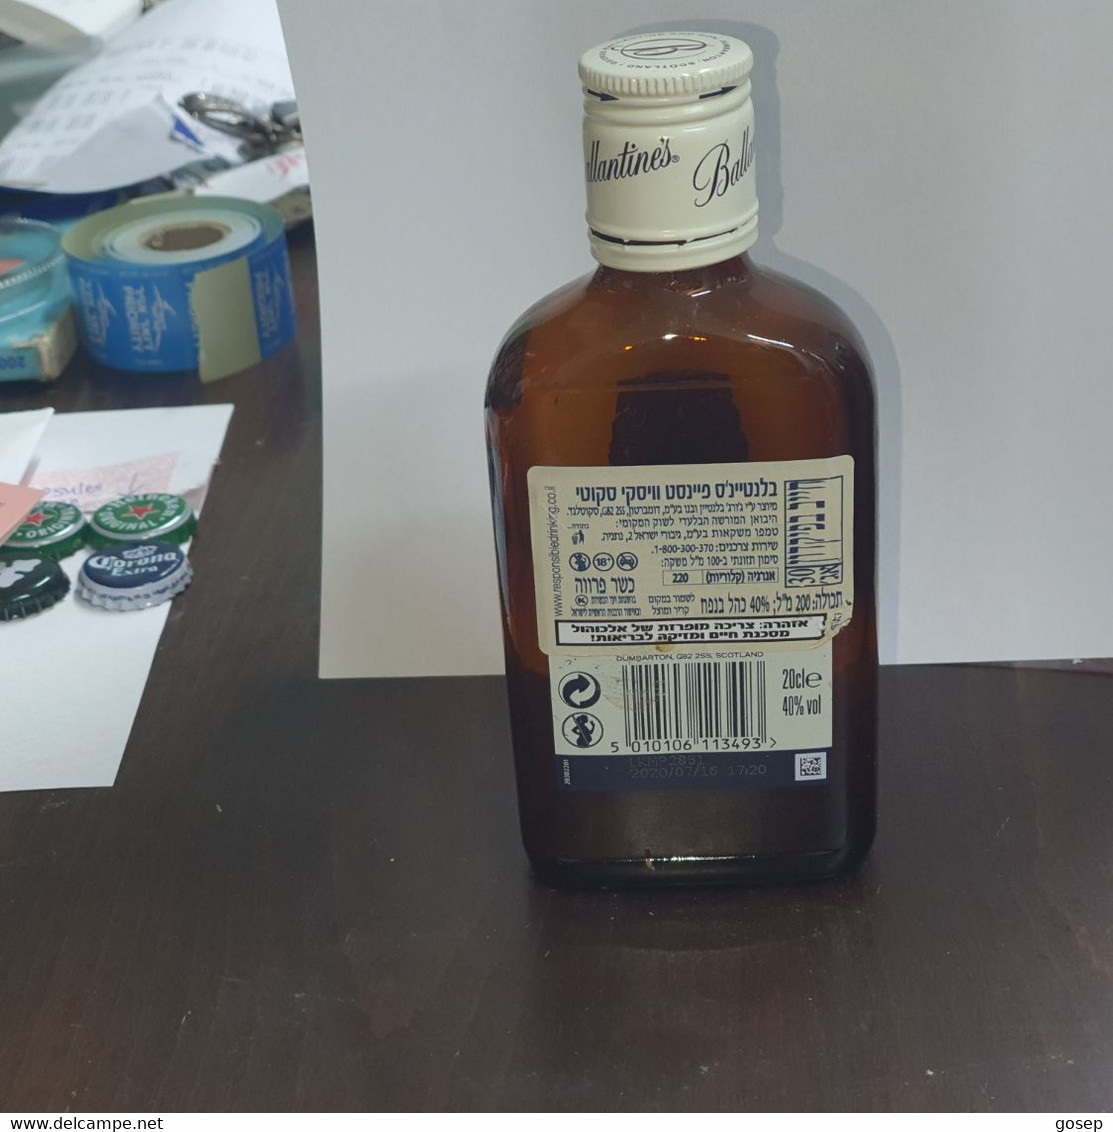 Scotland-BALlANTIES-(the Original-whiskey)-(40%)-(200ml)-bottle Of Whiskey-used - Whisky